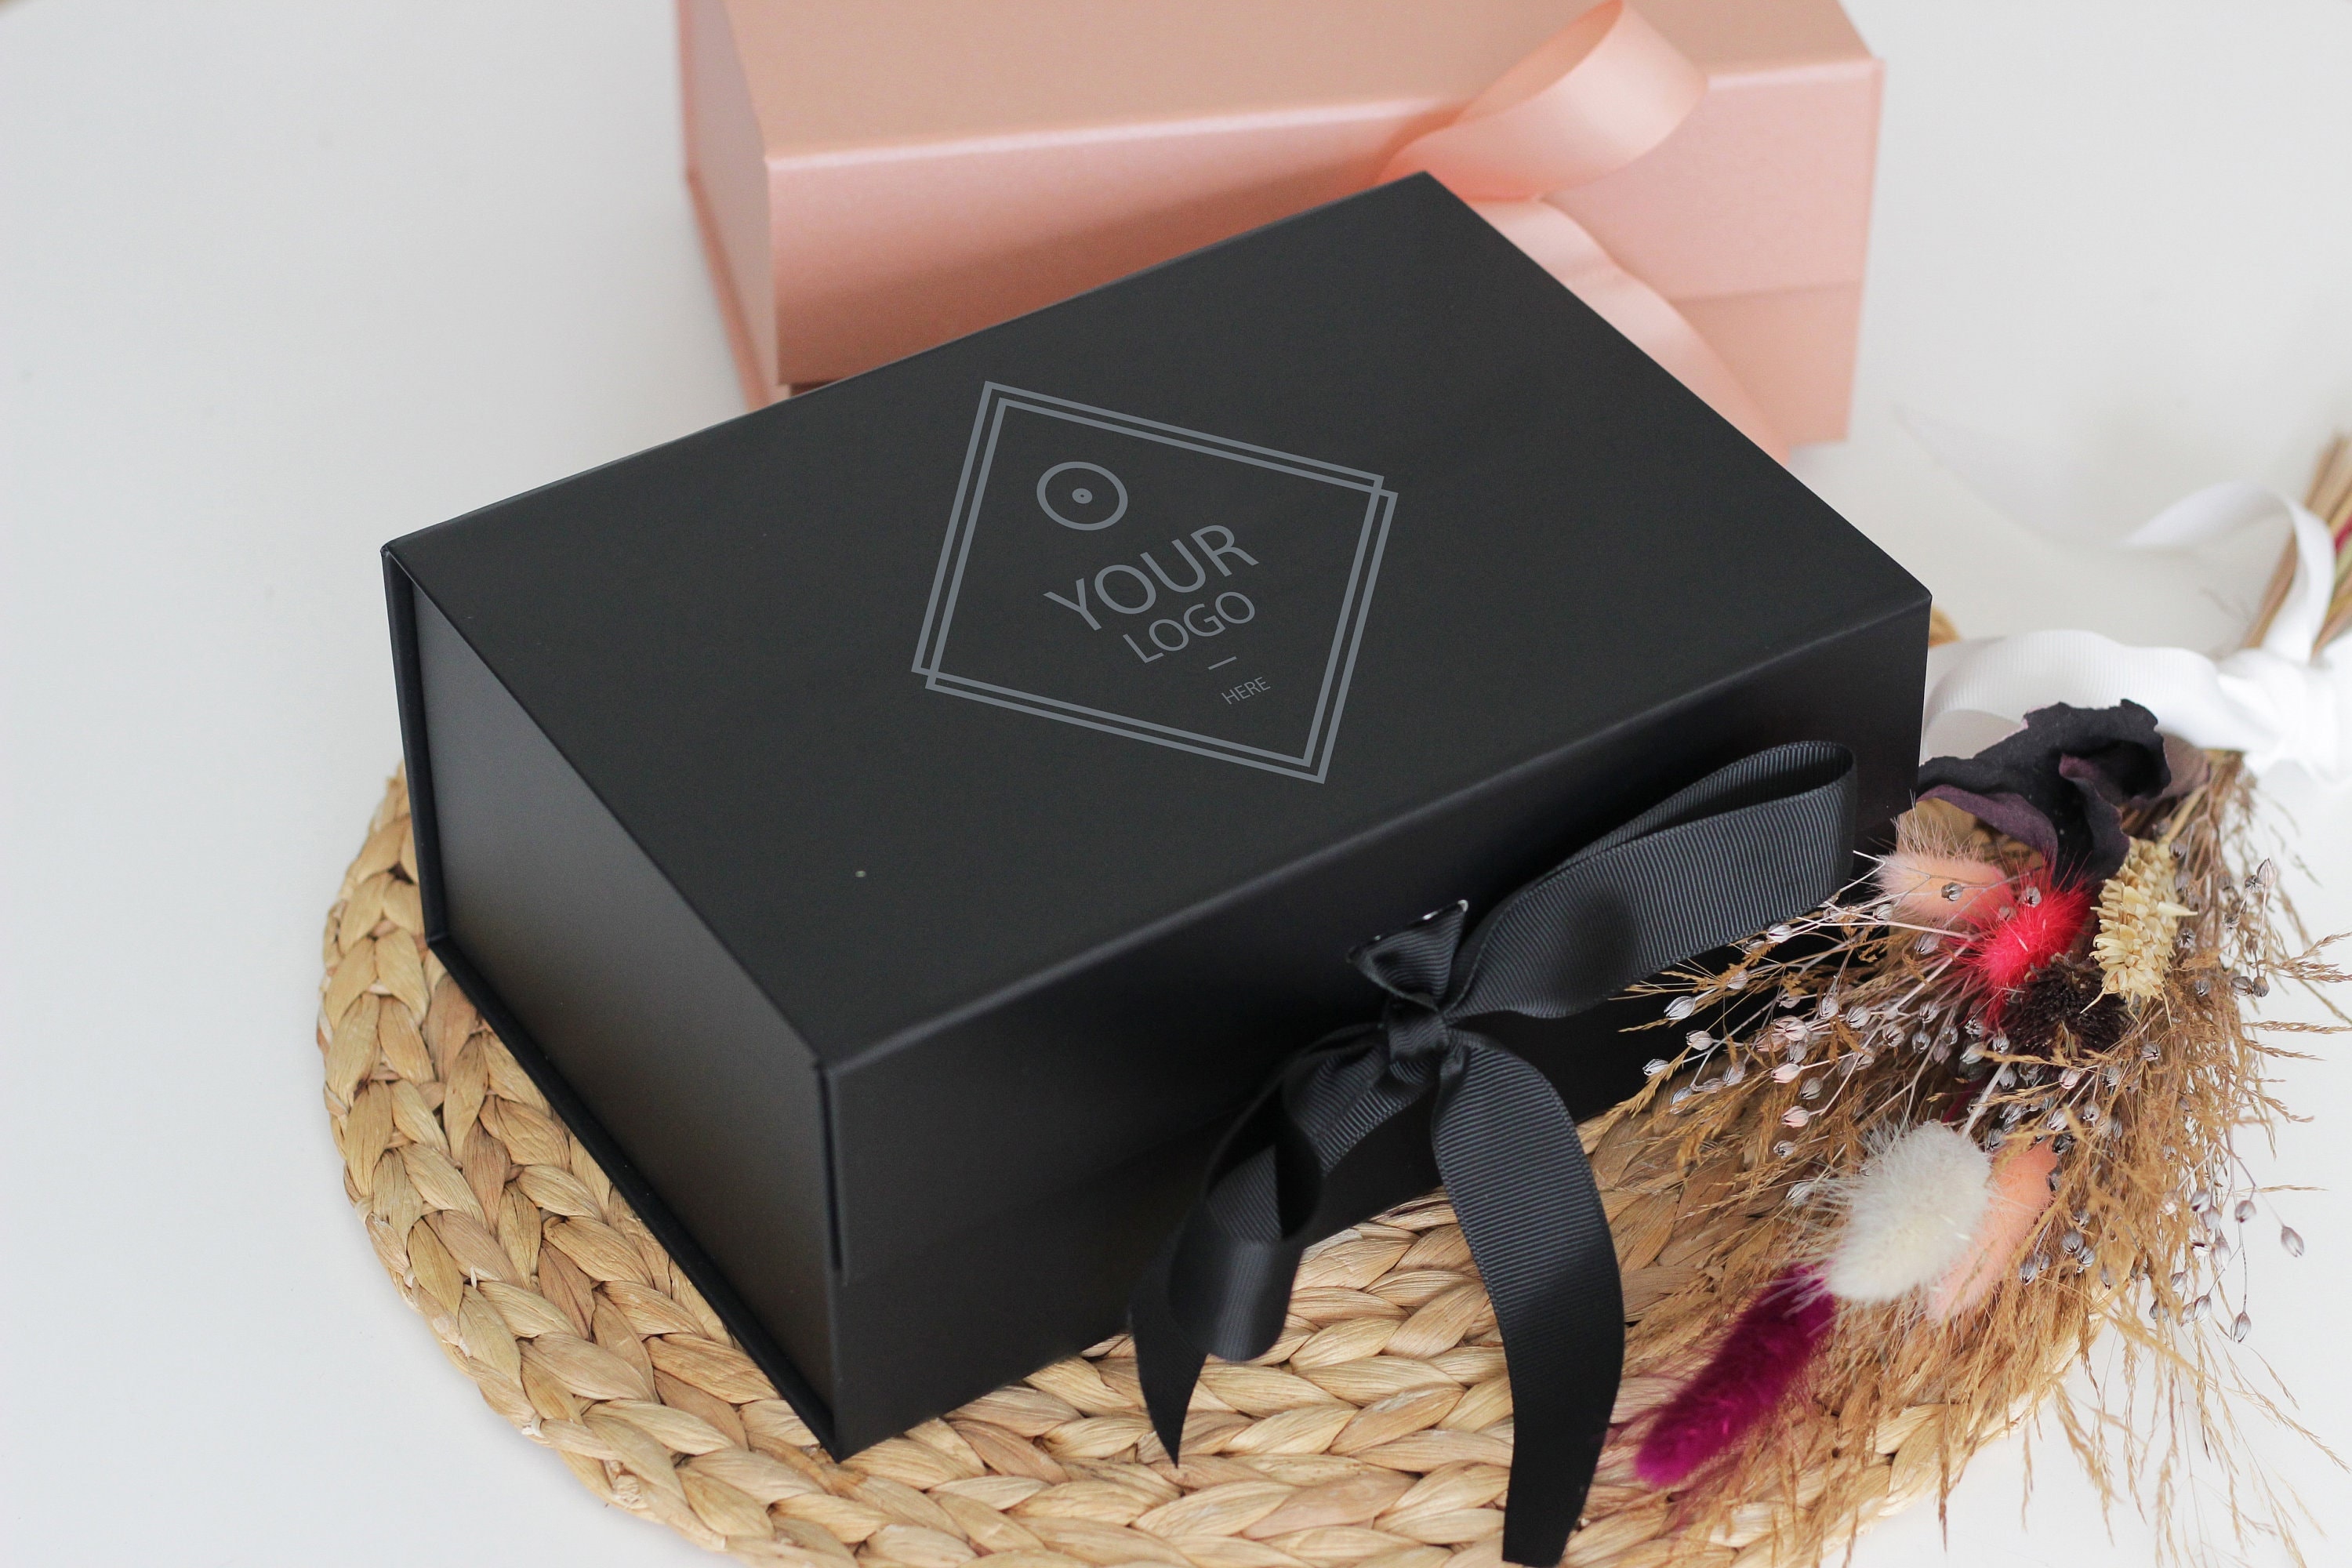 Mystic Oud - Perfume Gift Box - Historiae Secrets